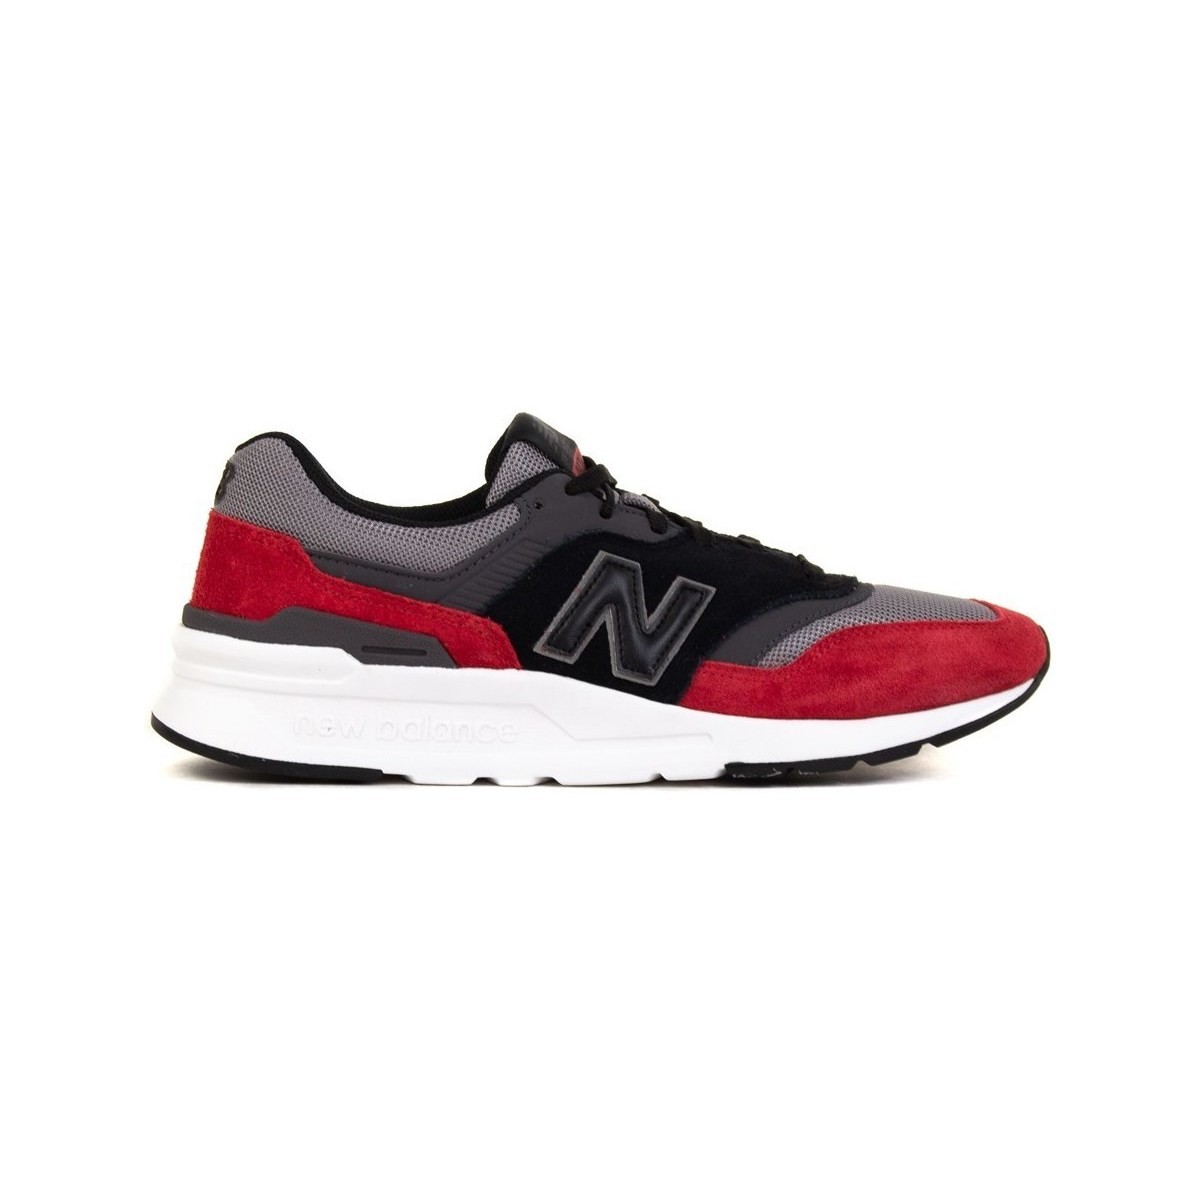 Pantofi Bărbați Pantofi sport Casual New Balance 997 Negre, Roșii